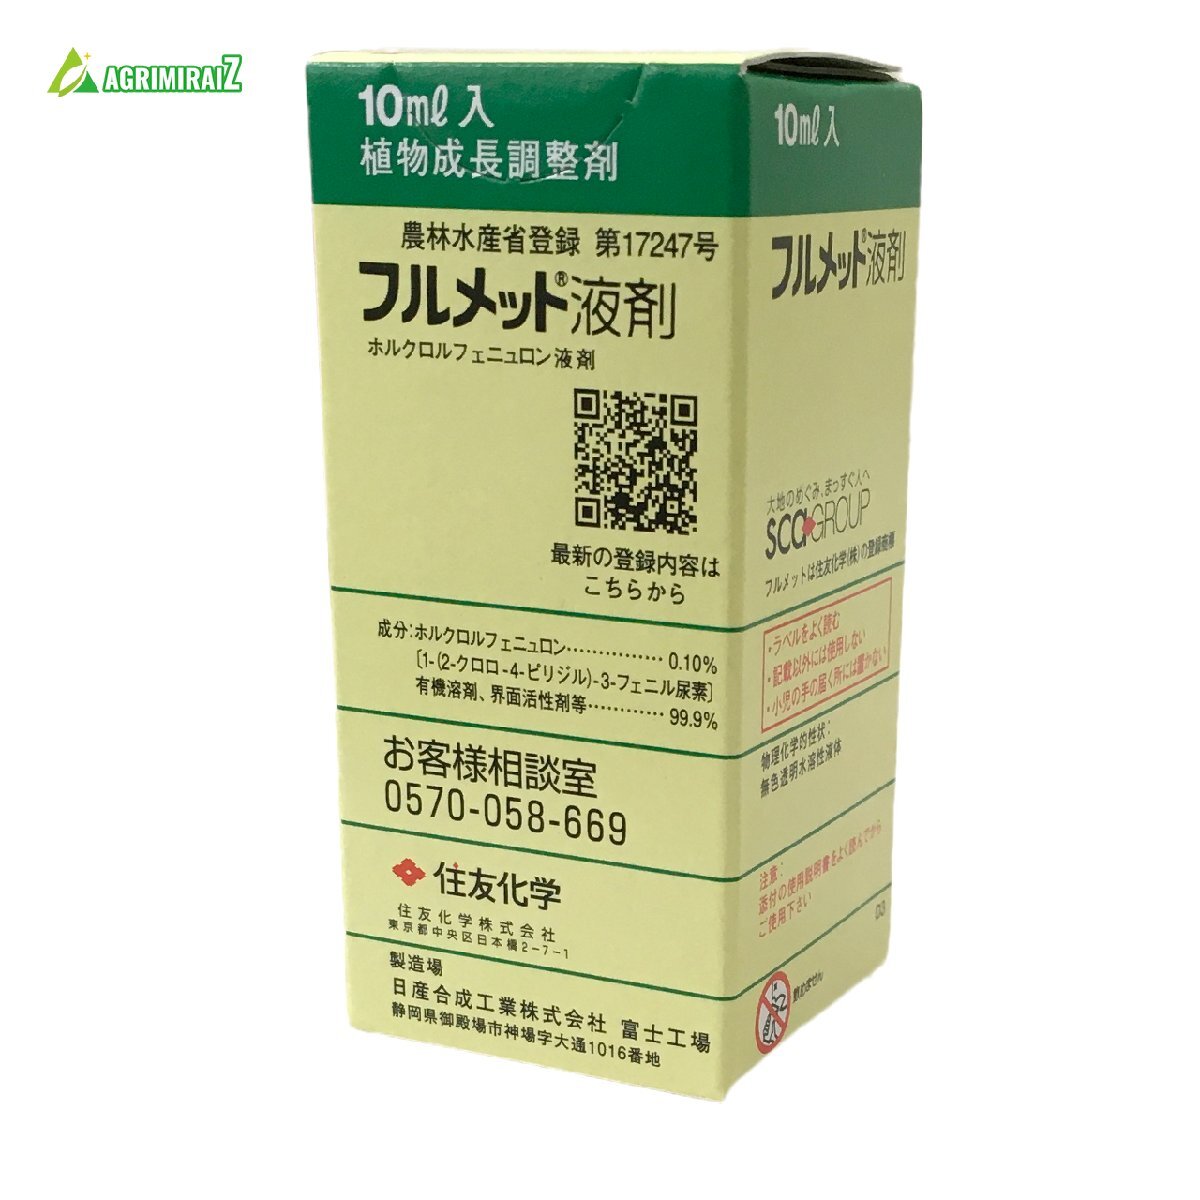  full meto fluid . grape pesticide Sumitomo chemistry full meto fluid .10ml